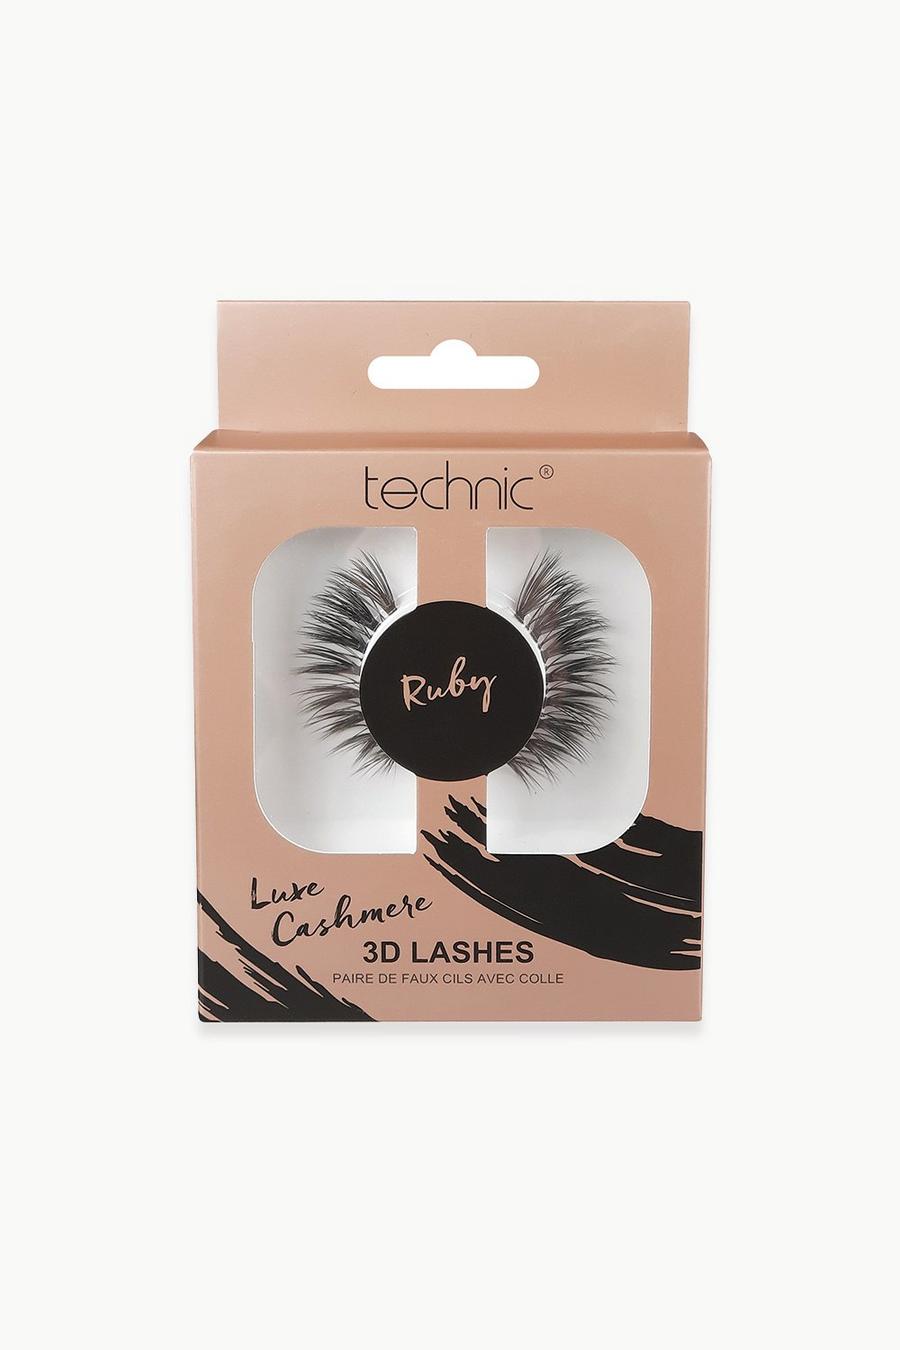 Technic - Faux cils Luxe Cashmere - Ruby, Black